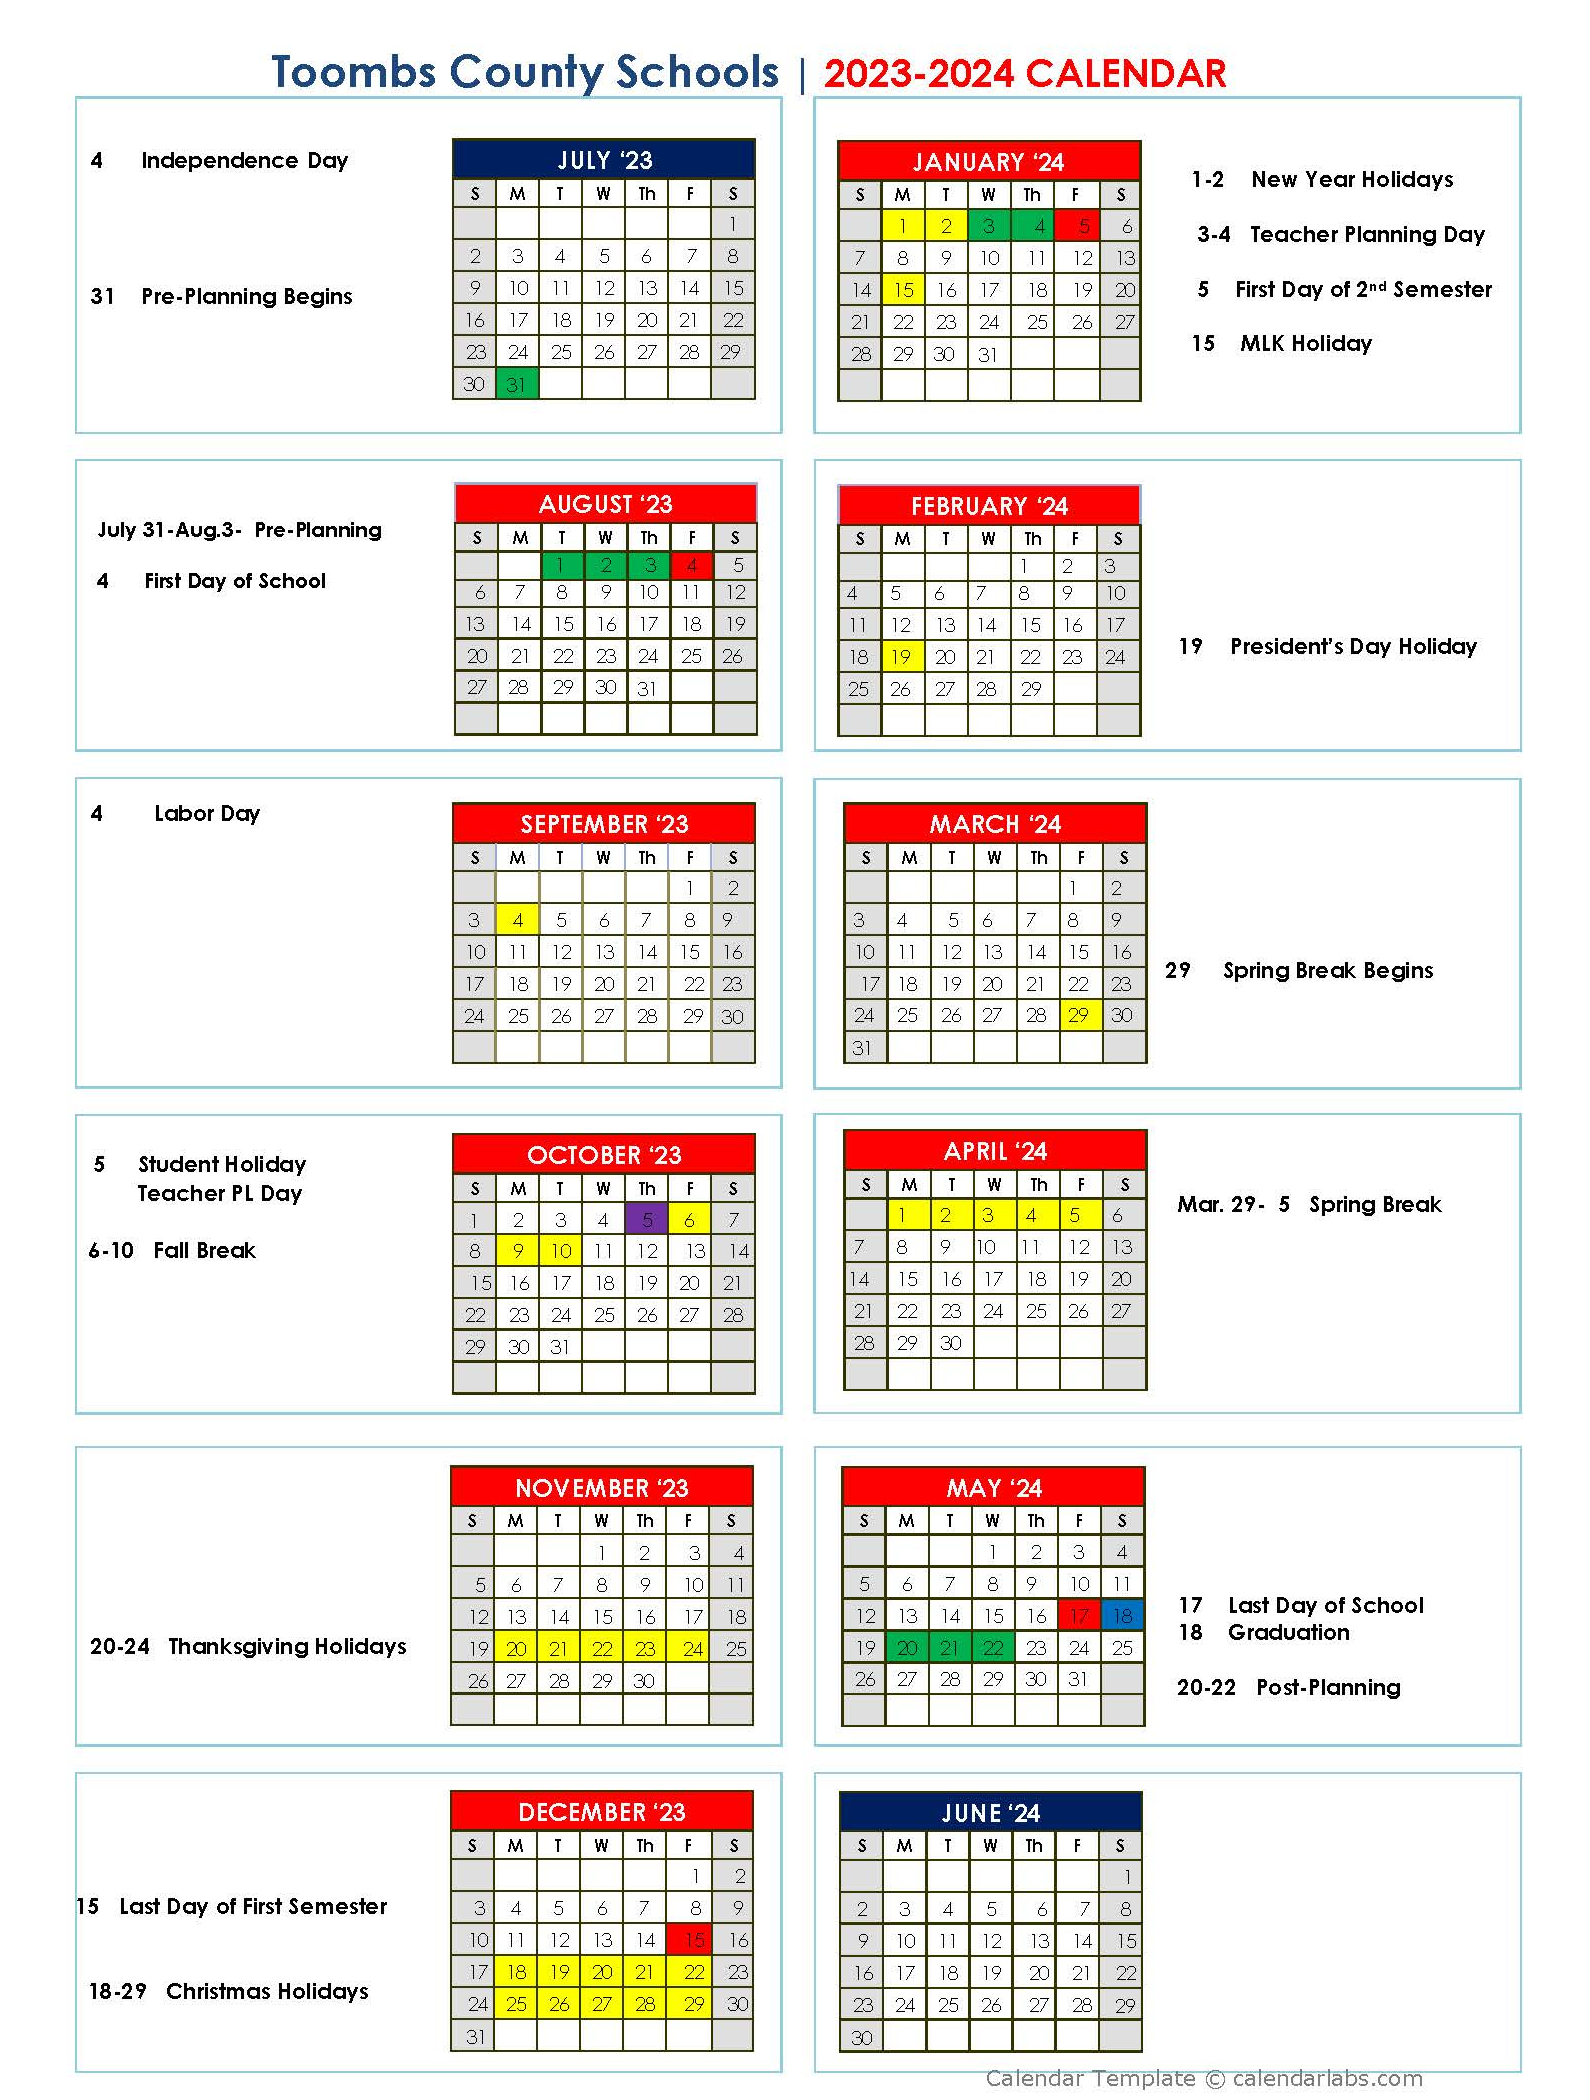 23-24 TCS Calendar